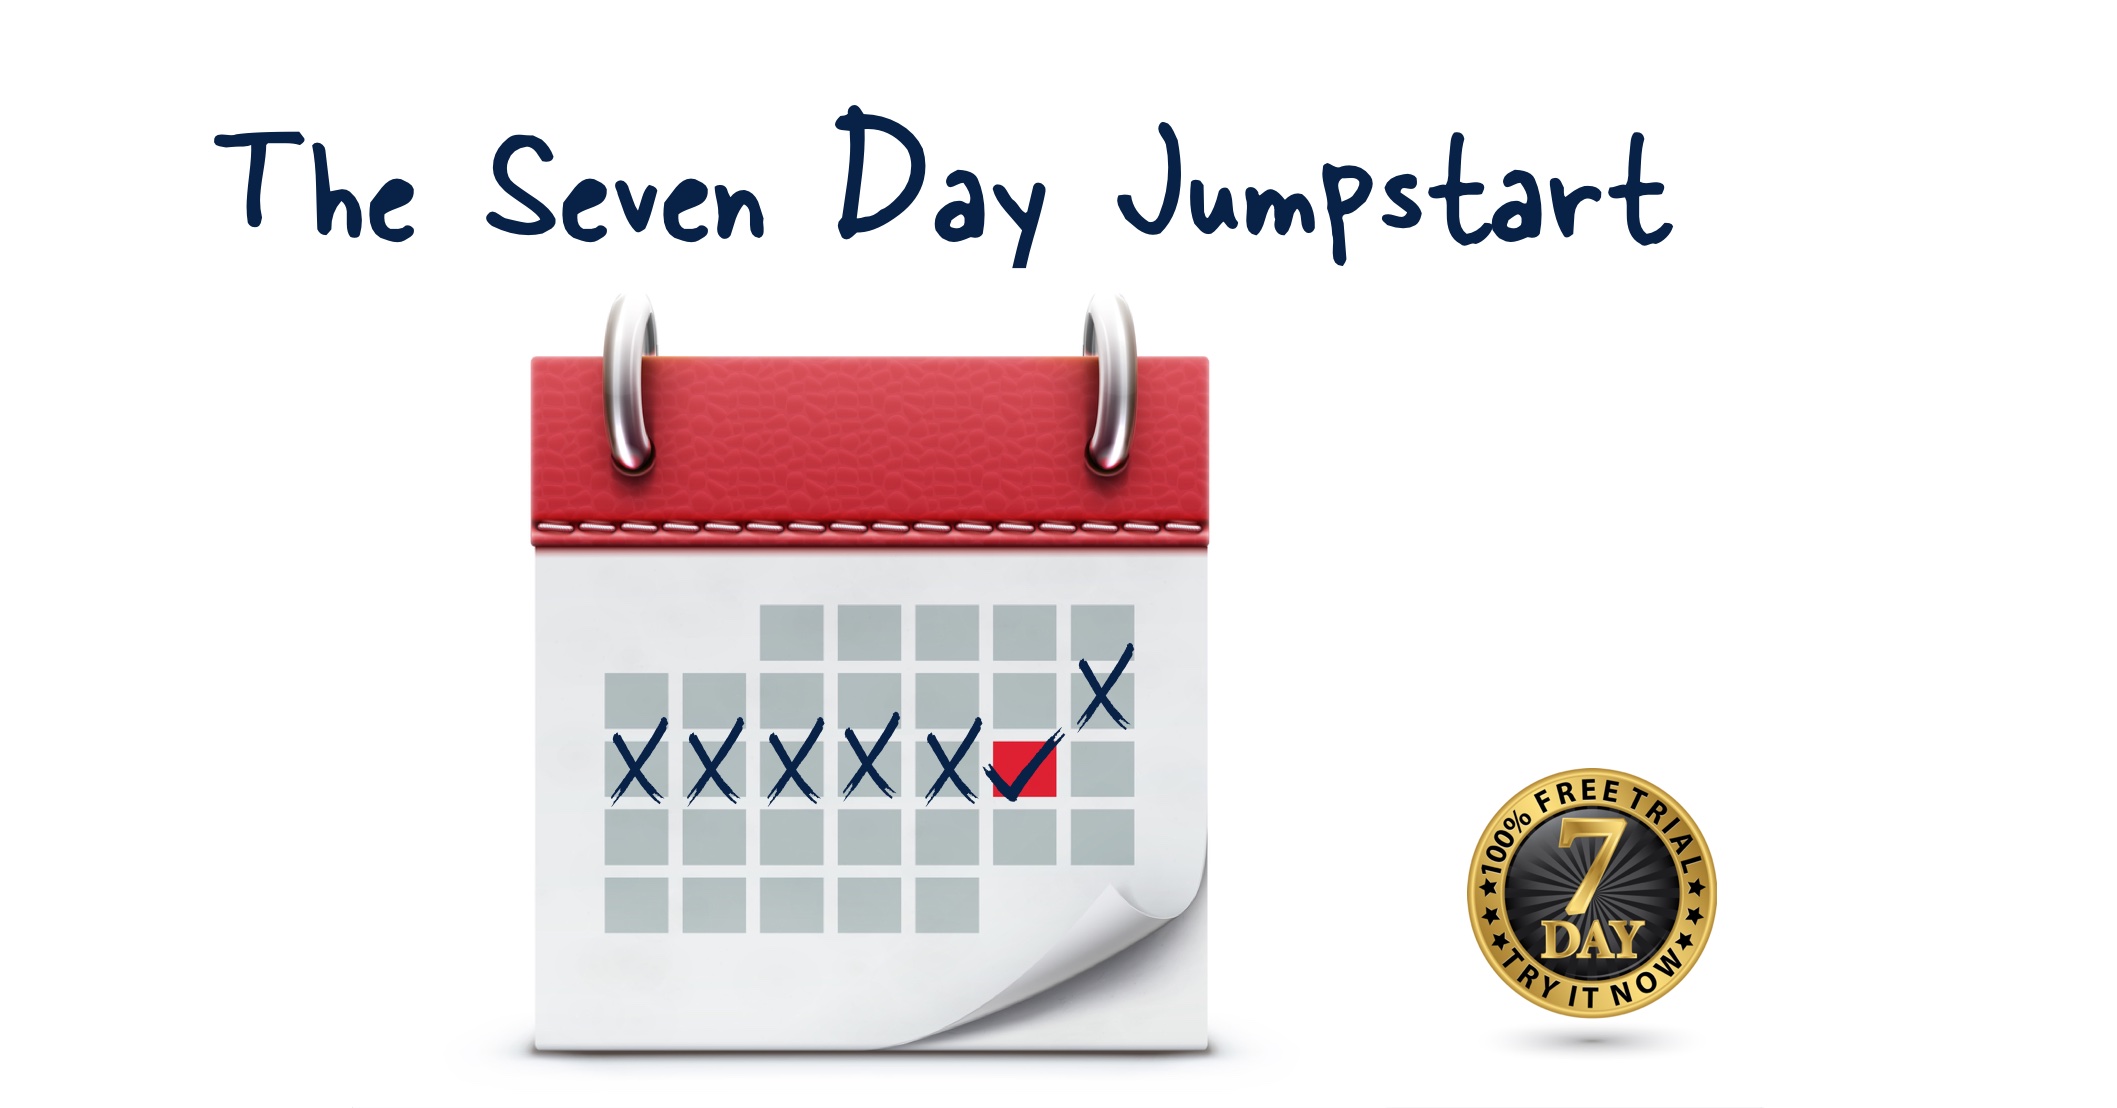 The Seven Day Jumpstart